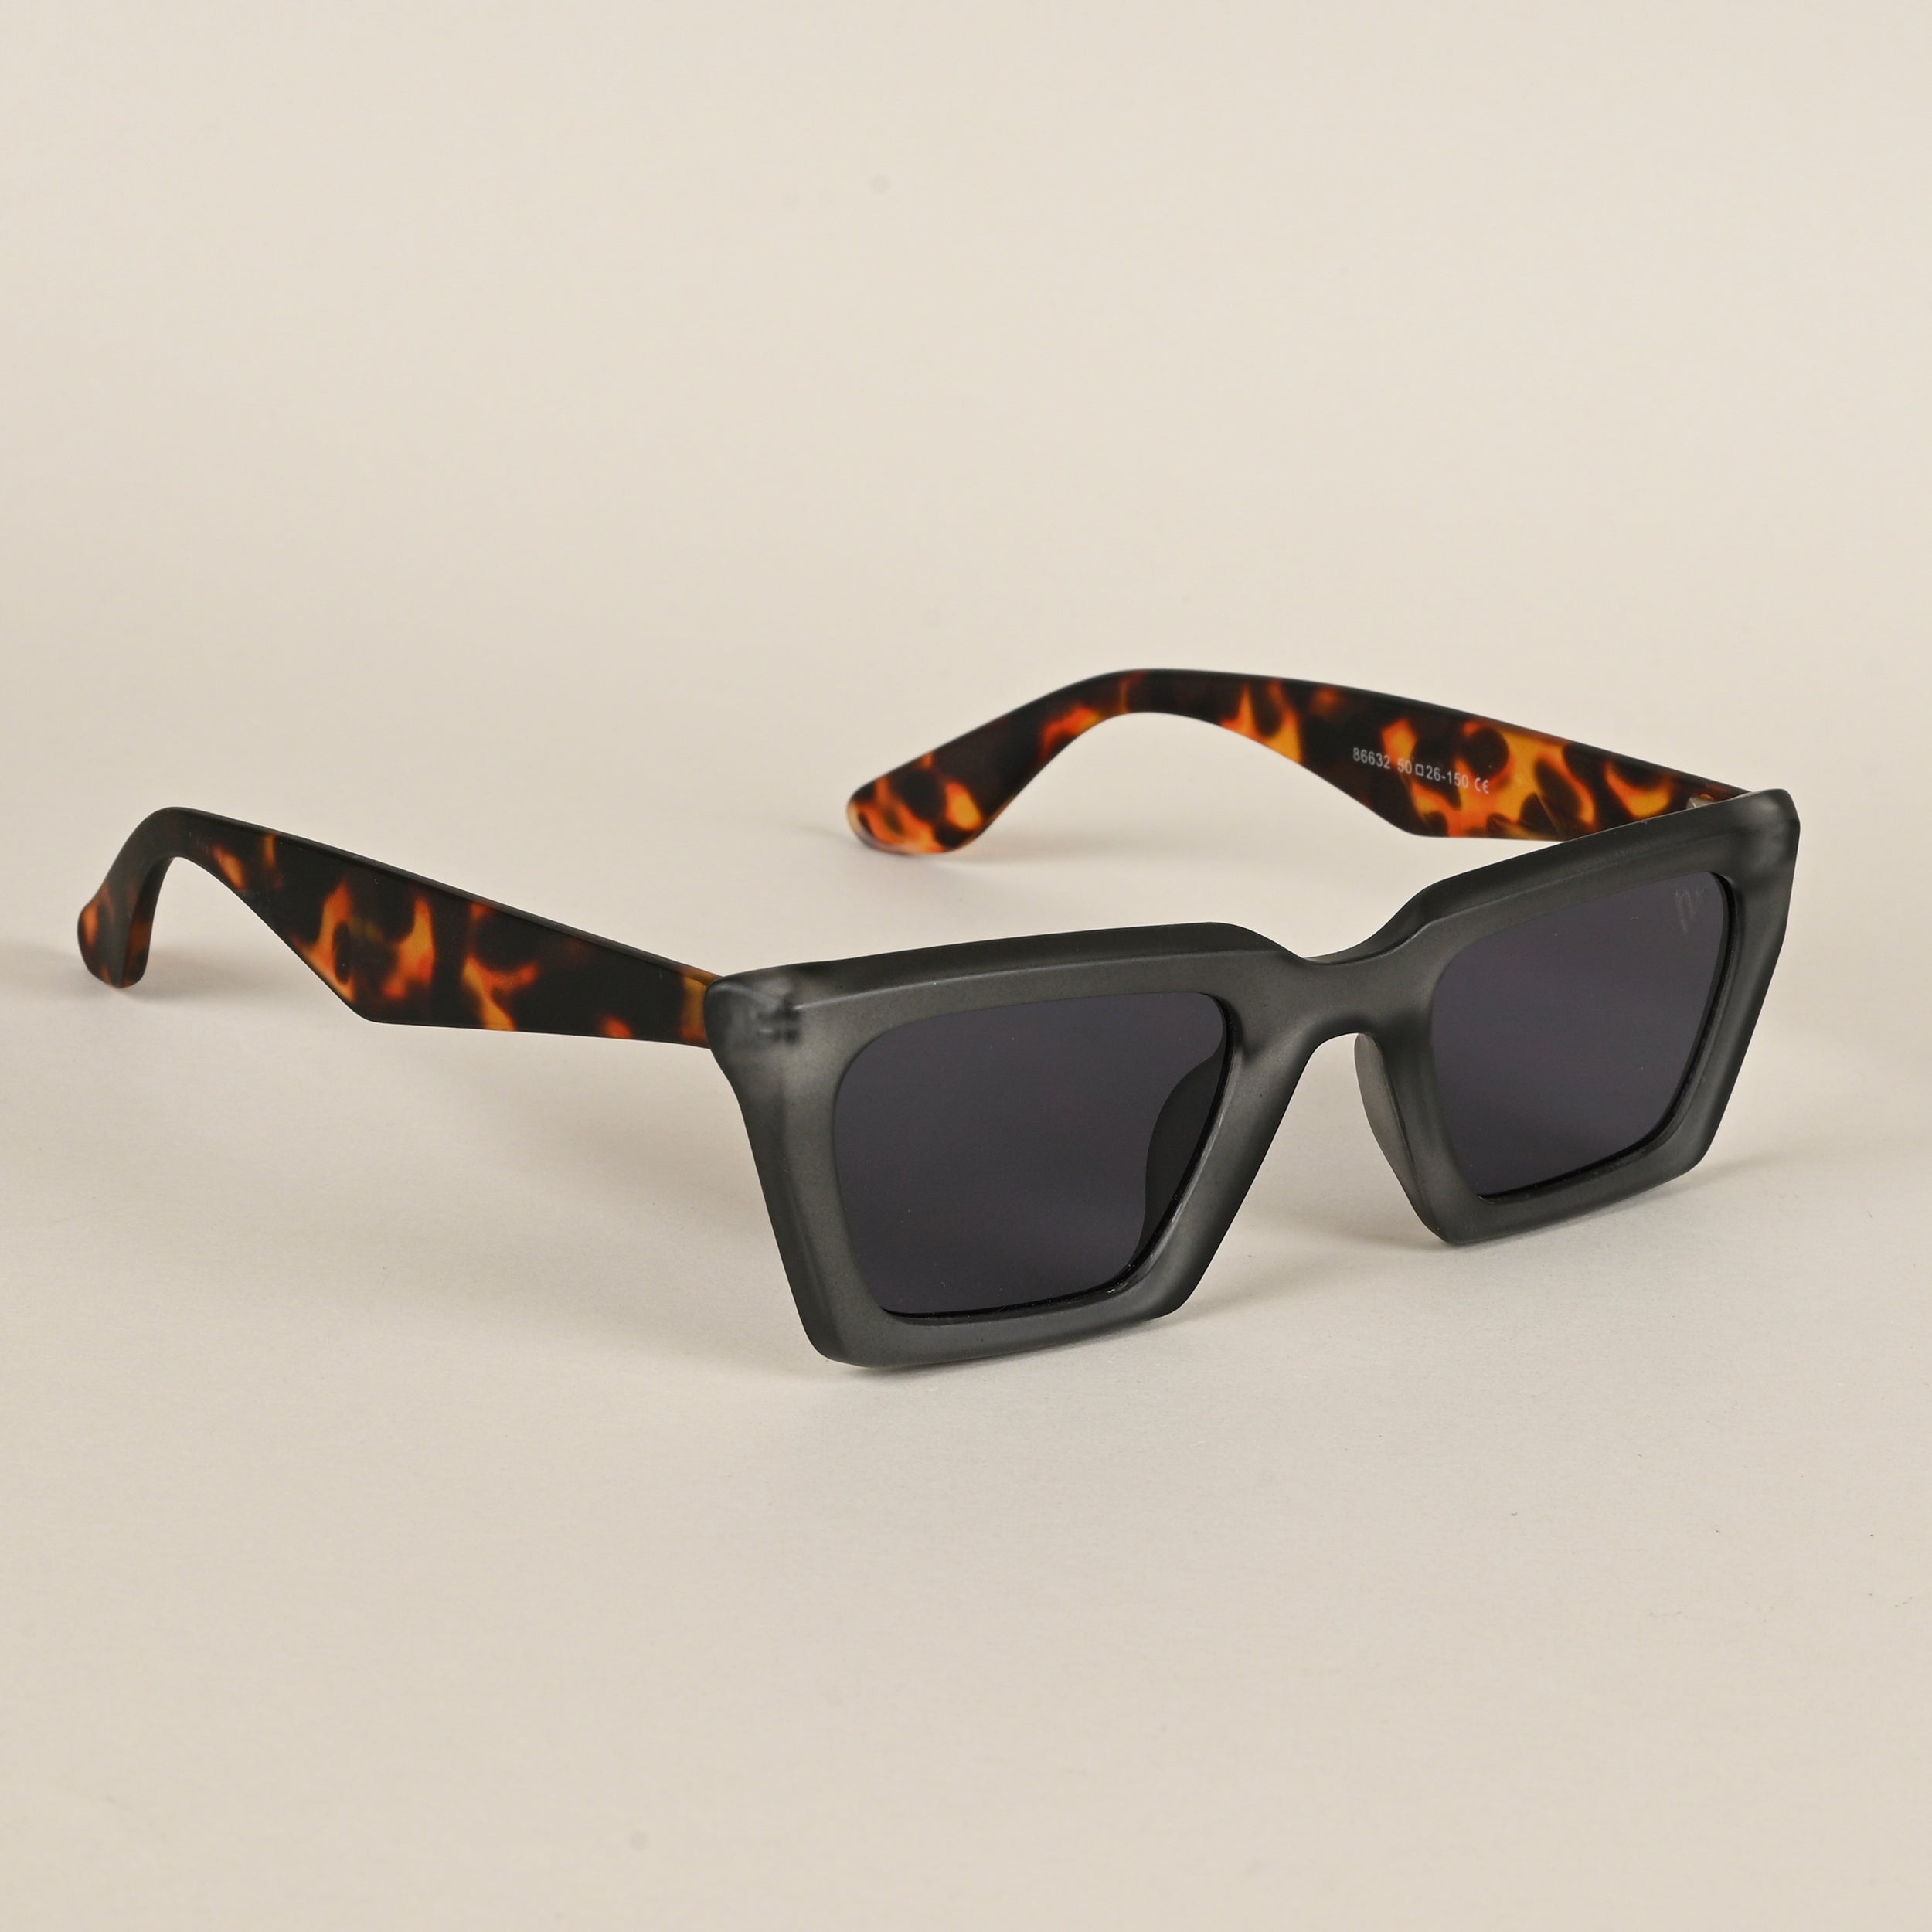 Voyage Black Wayfarer Sunglasses for Men & Women (86632MG4124)